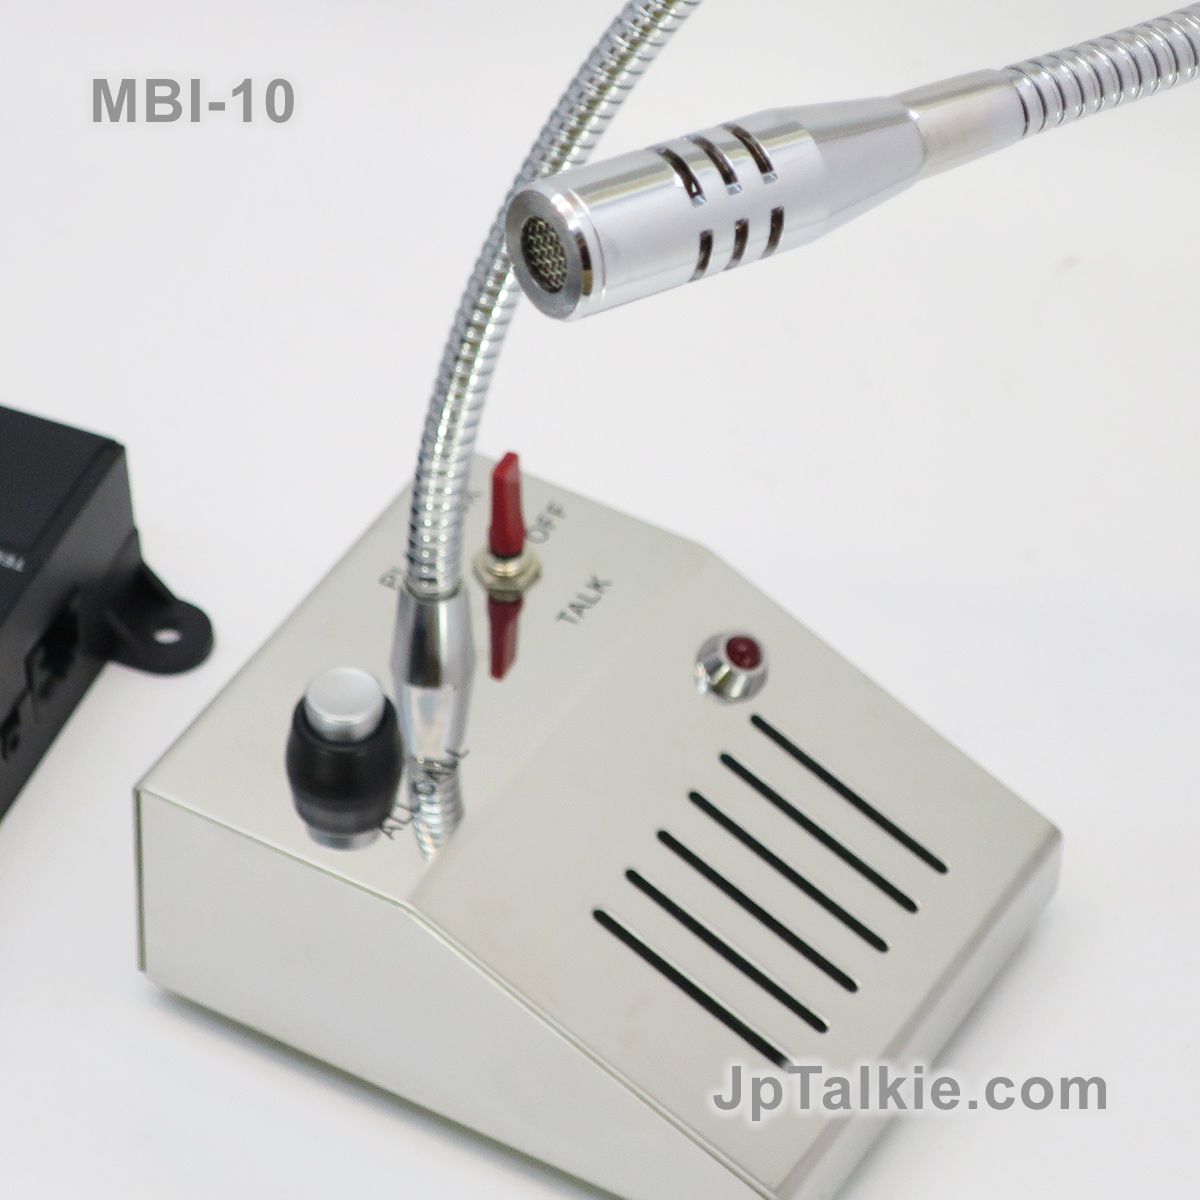 MBI-10窗口主機連MBI-11分機 窗口雙向對講機,客服櫃檯對講系統, 安裝簡便操作容易 有線對講機 金屬外殼 細分機